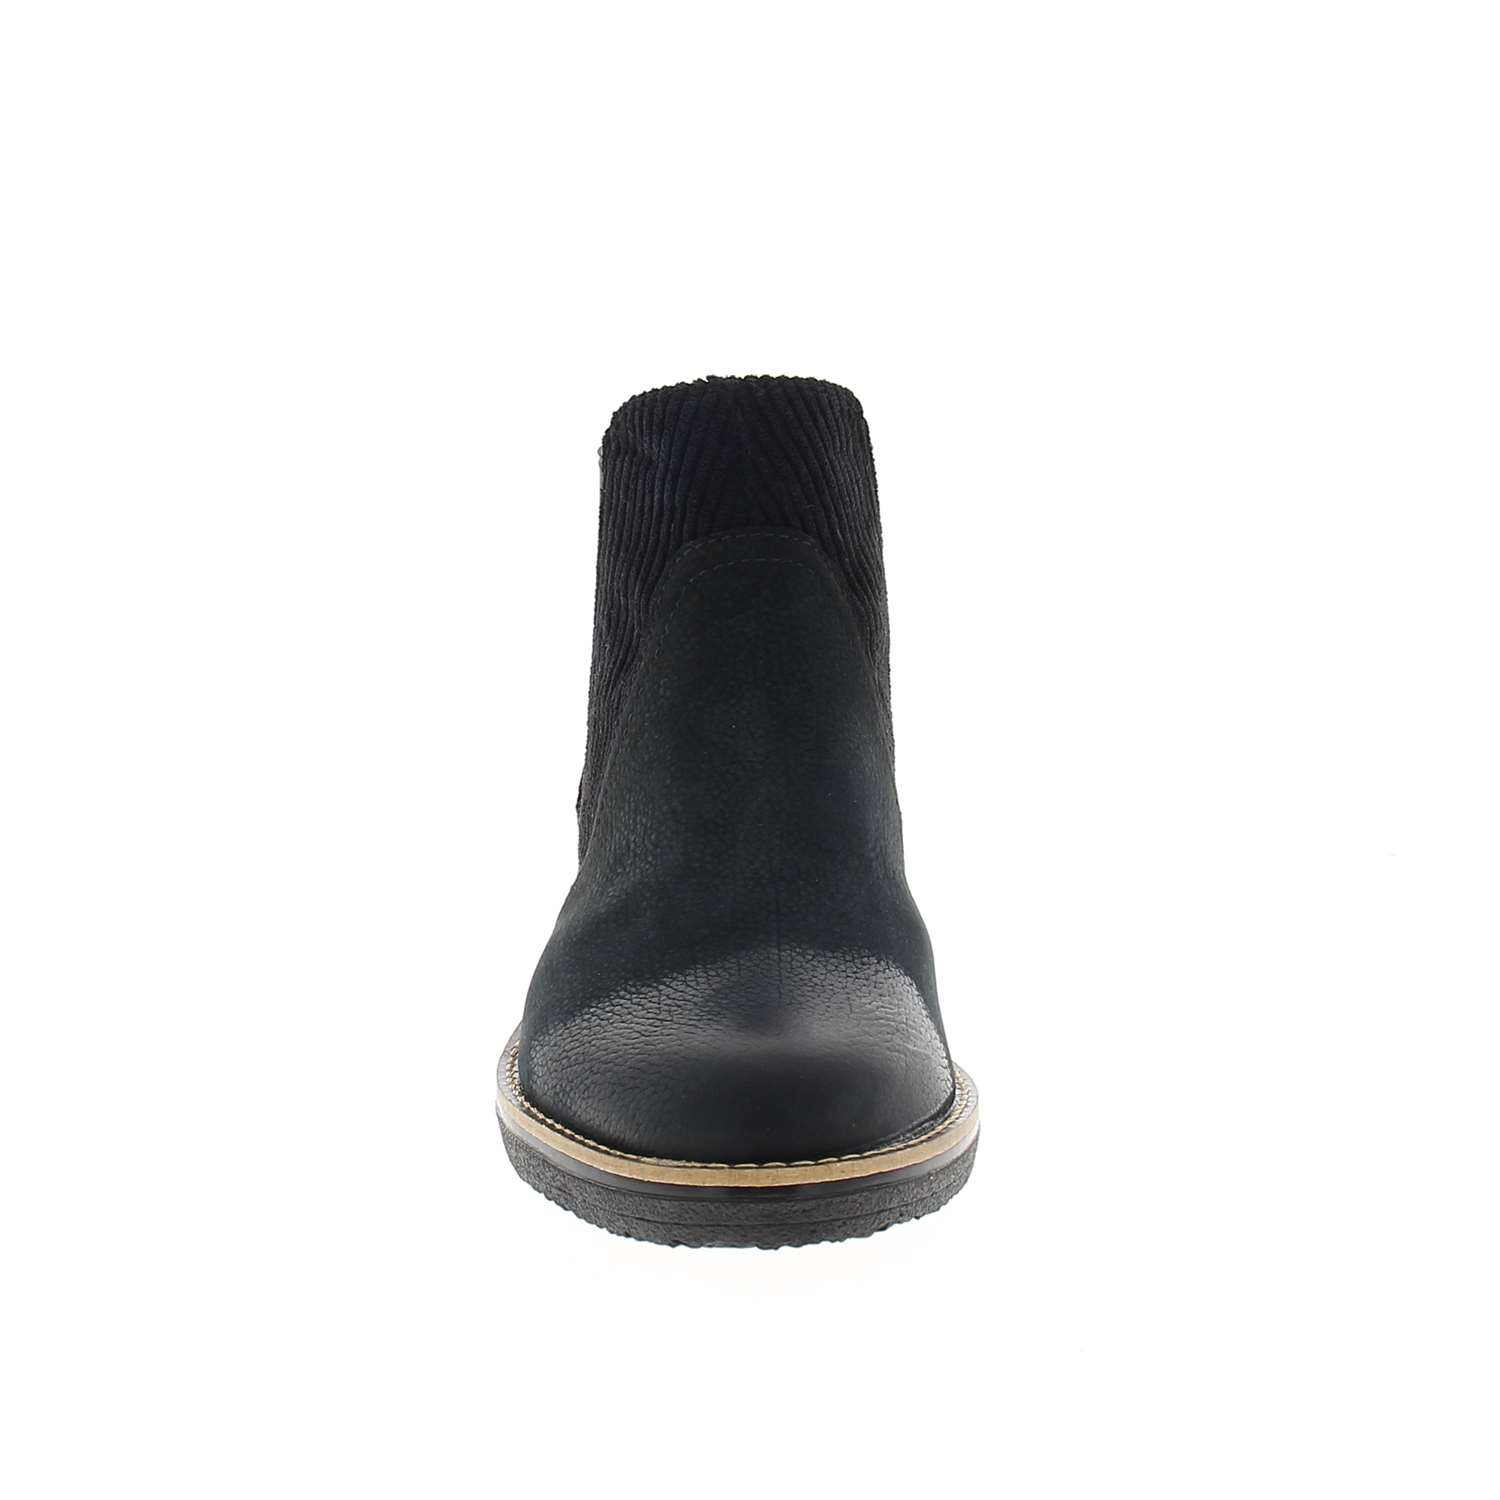 03 - GELAX - FUGITIVE - Boots et bottines - Croûte de cuir